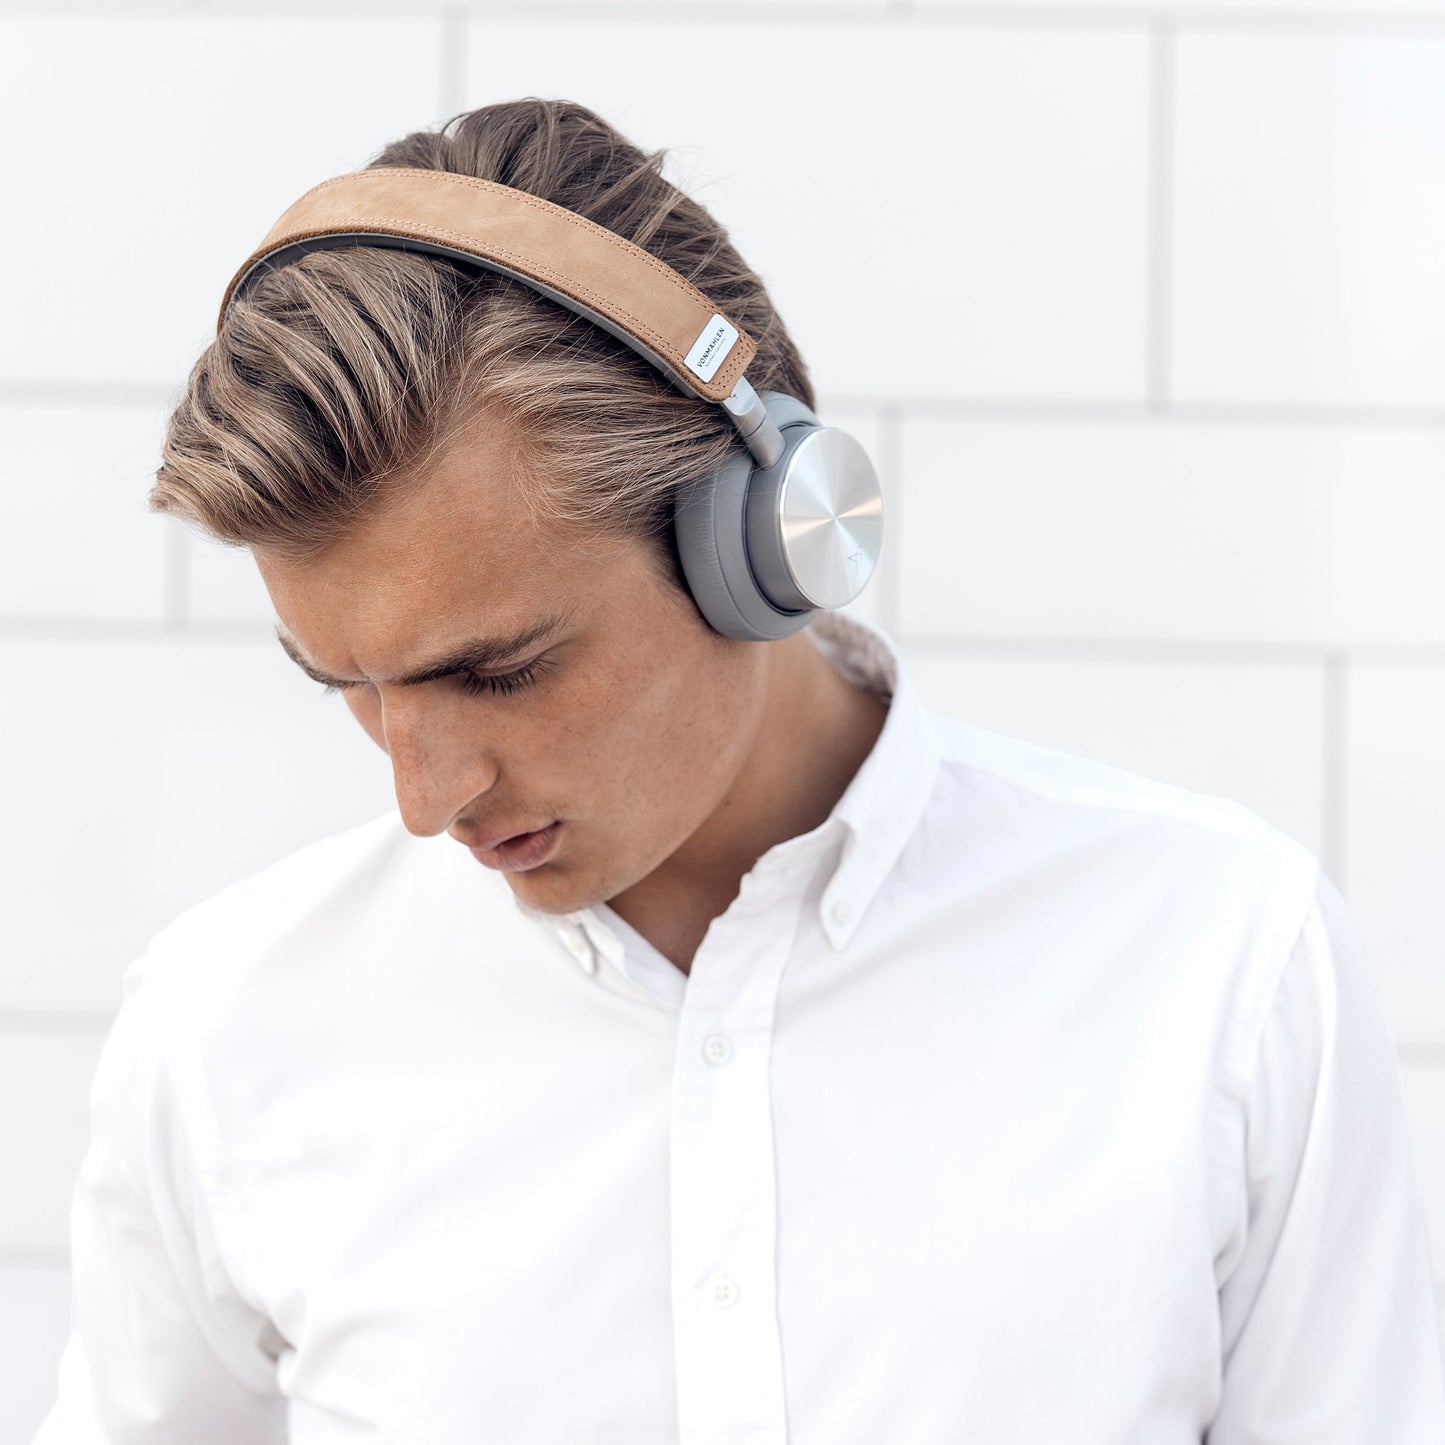 Vonmaehlen Wireless Concert One Bluetooth On-Ear Headphones - Black